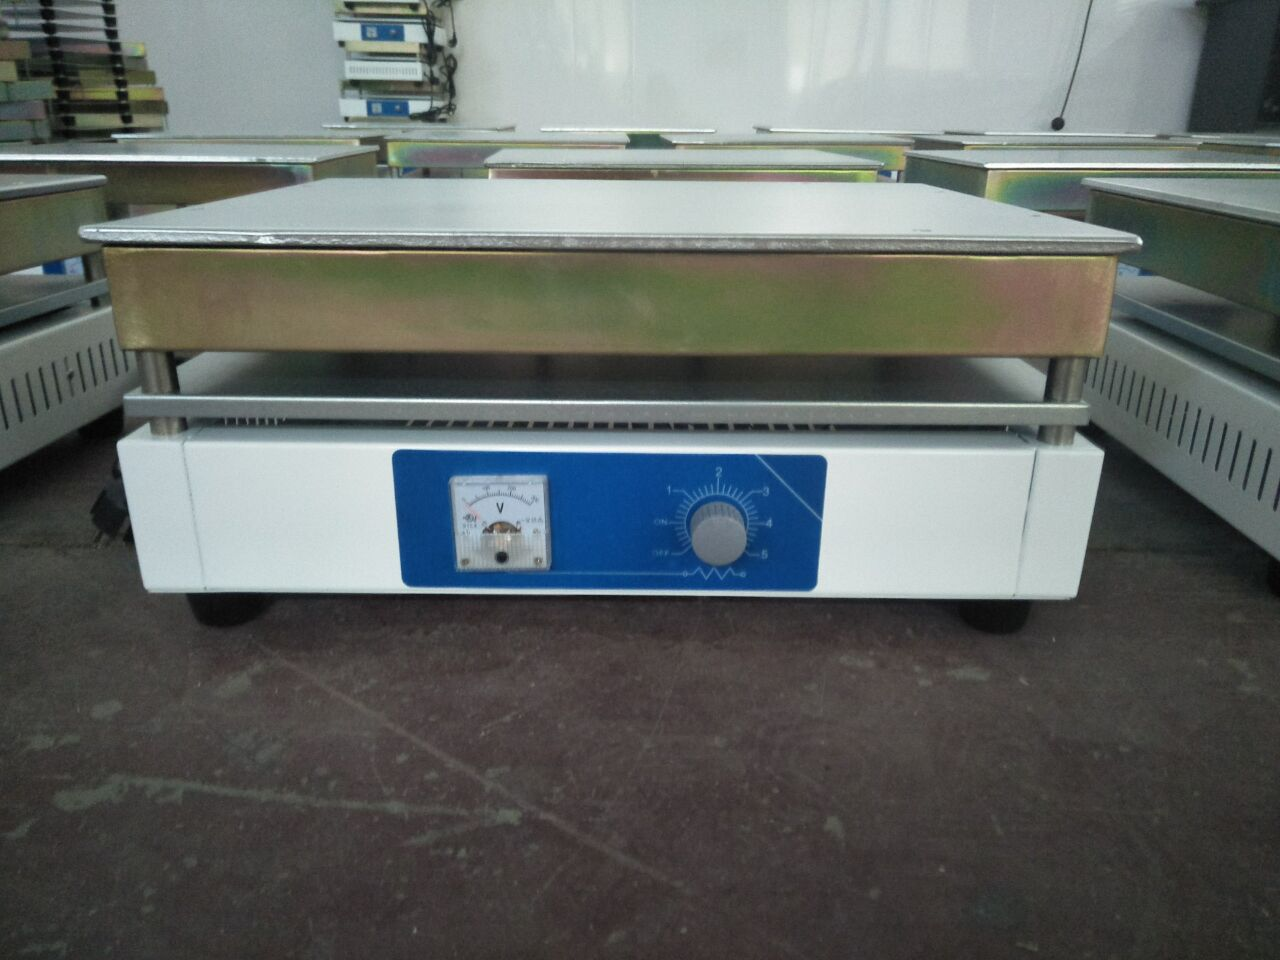 Laboratory Heating Plate for Heaintg